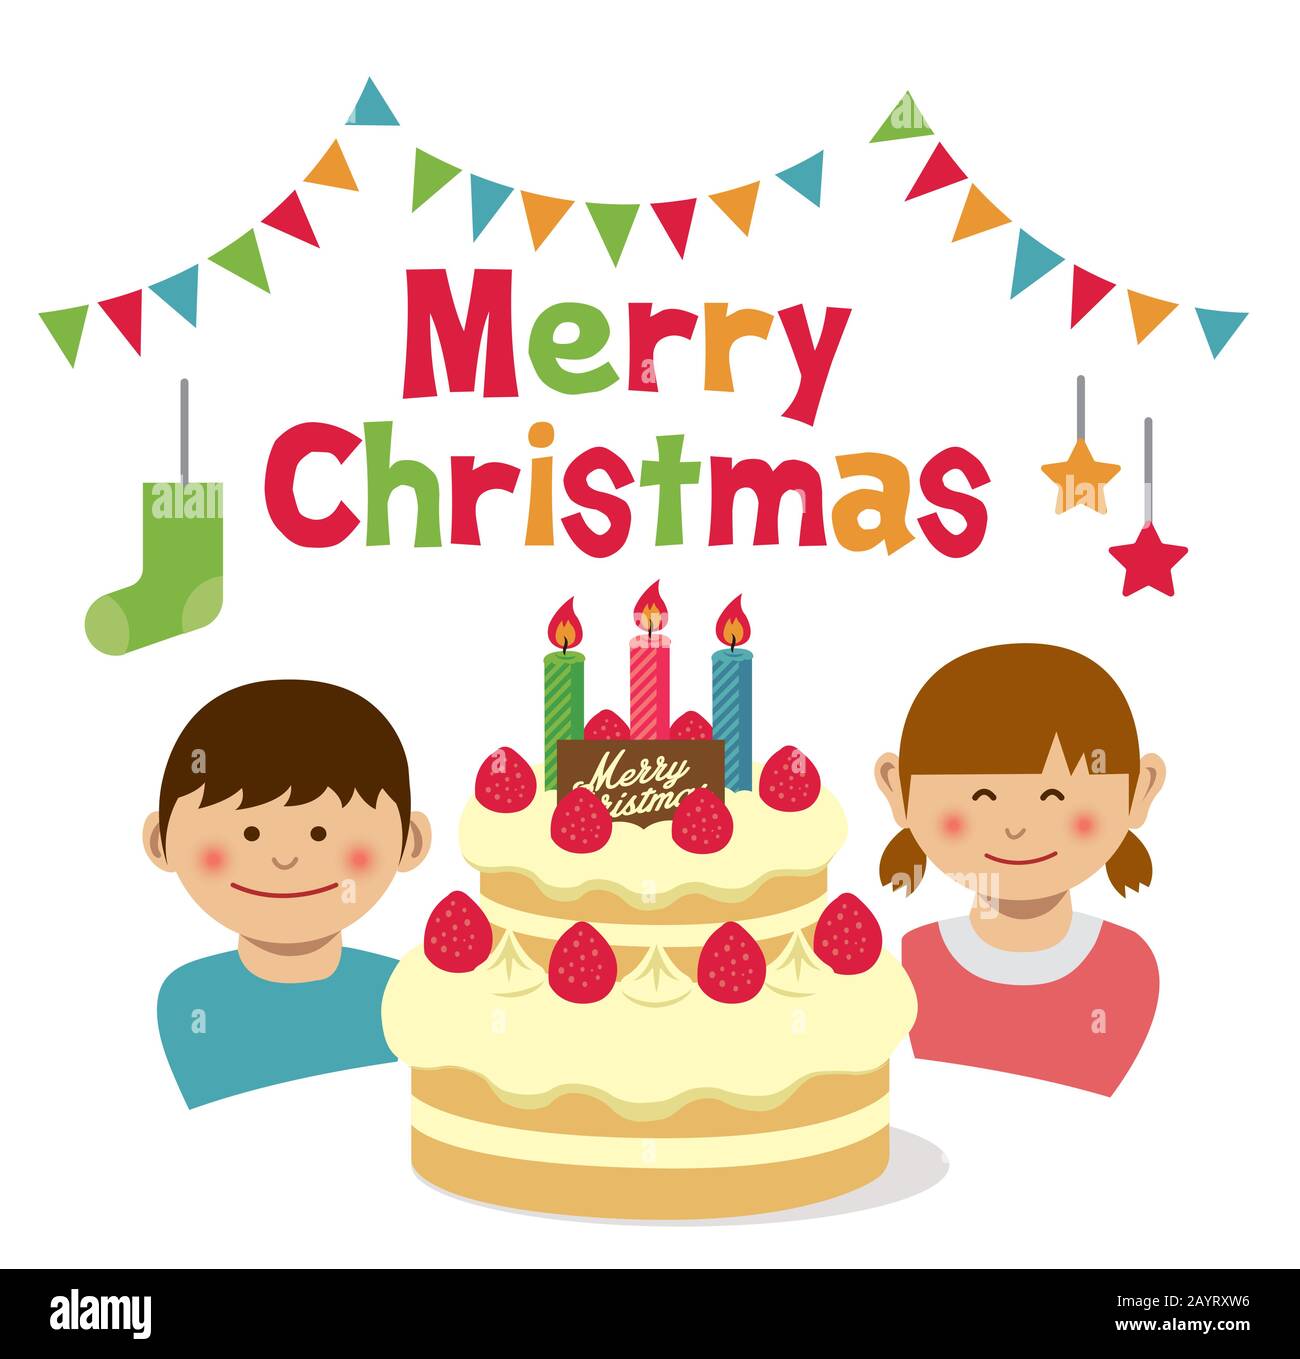 Merry christmas.Birthday cake and kids illustration. Stock Vector